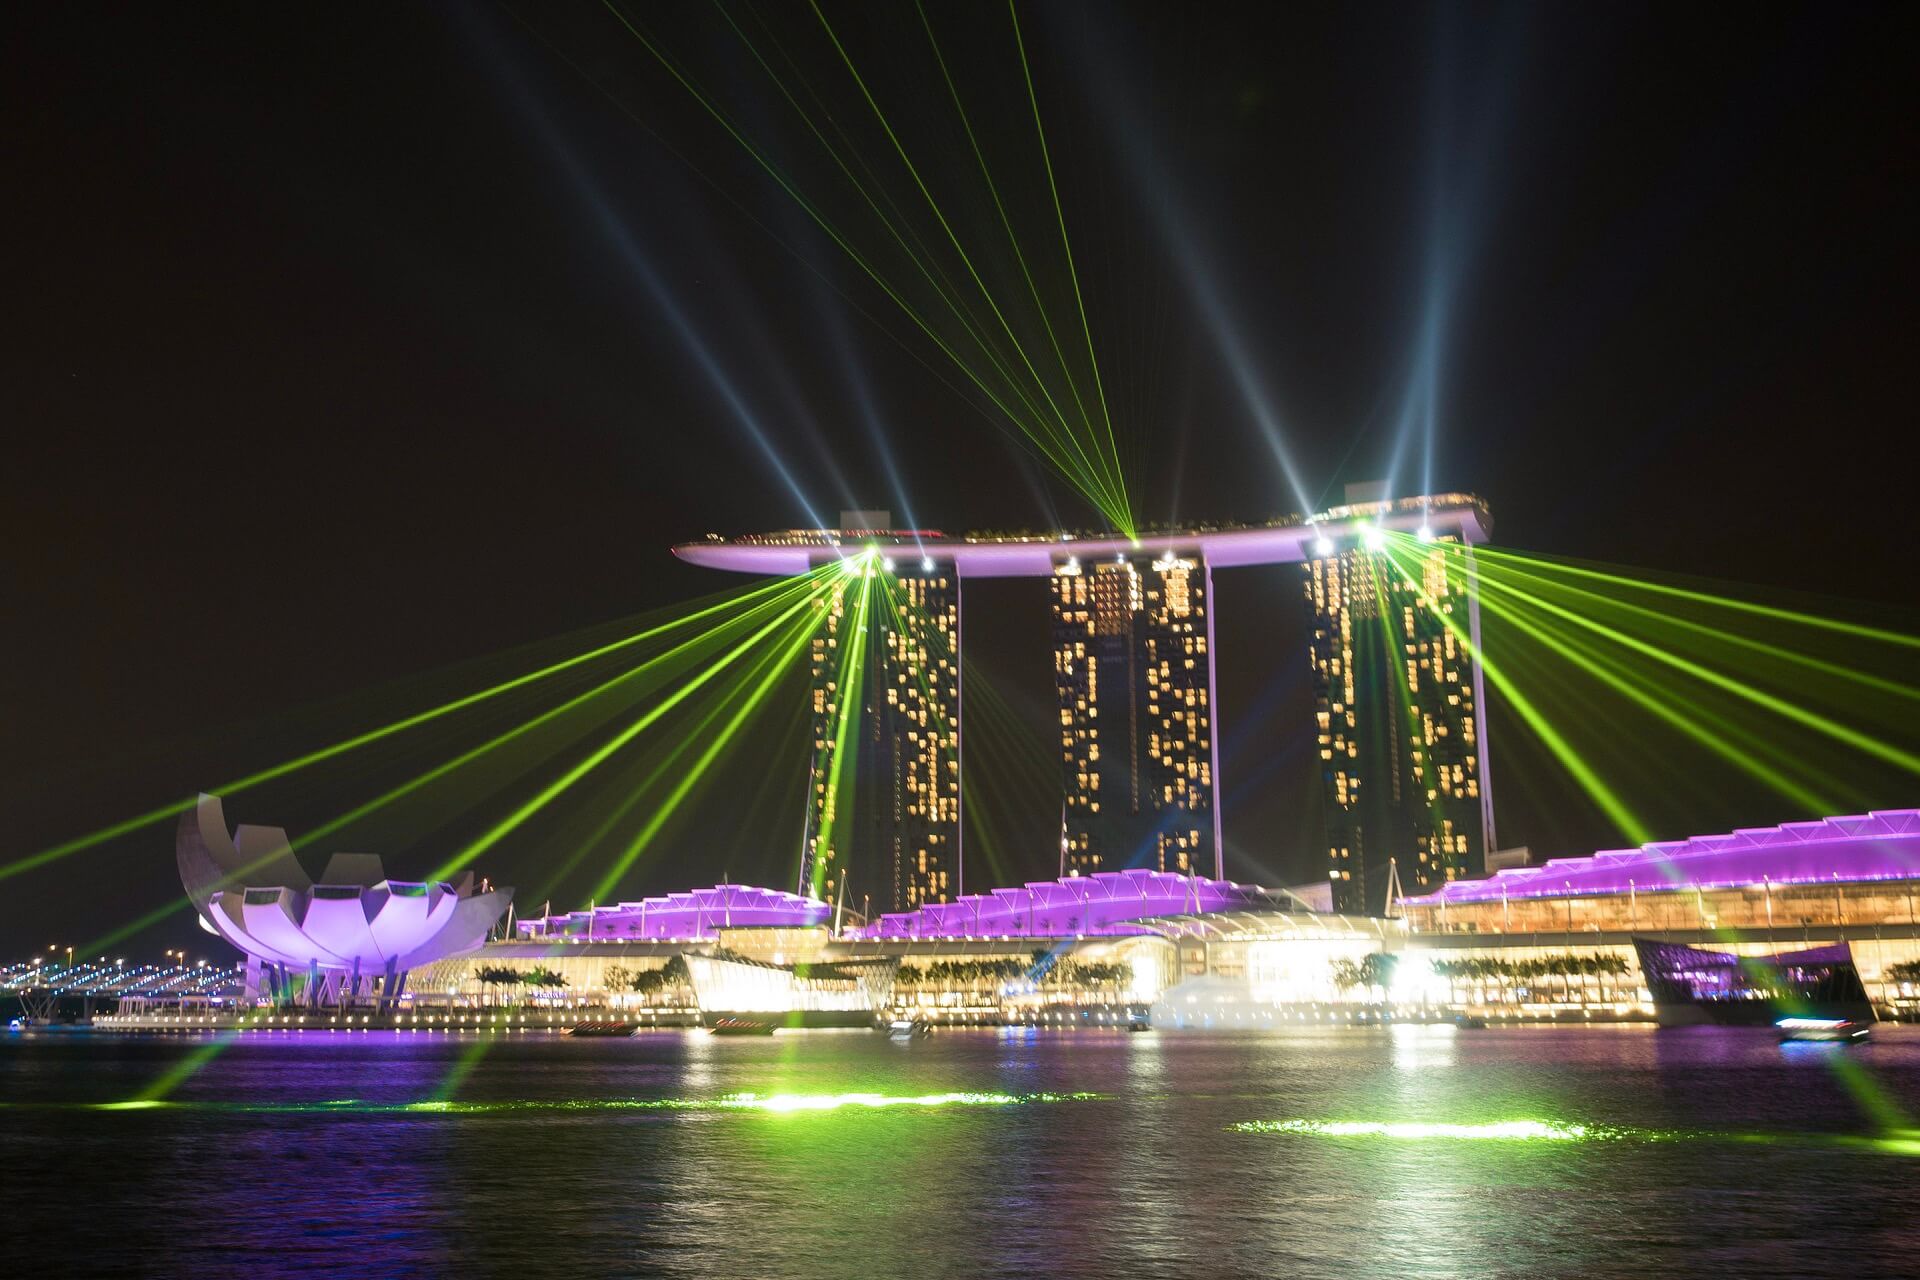 Laser lights on the Marina Bay Sands hotel at night